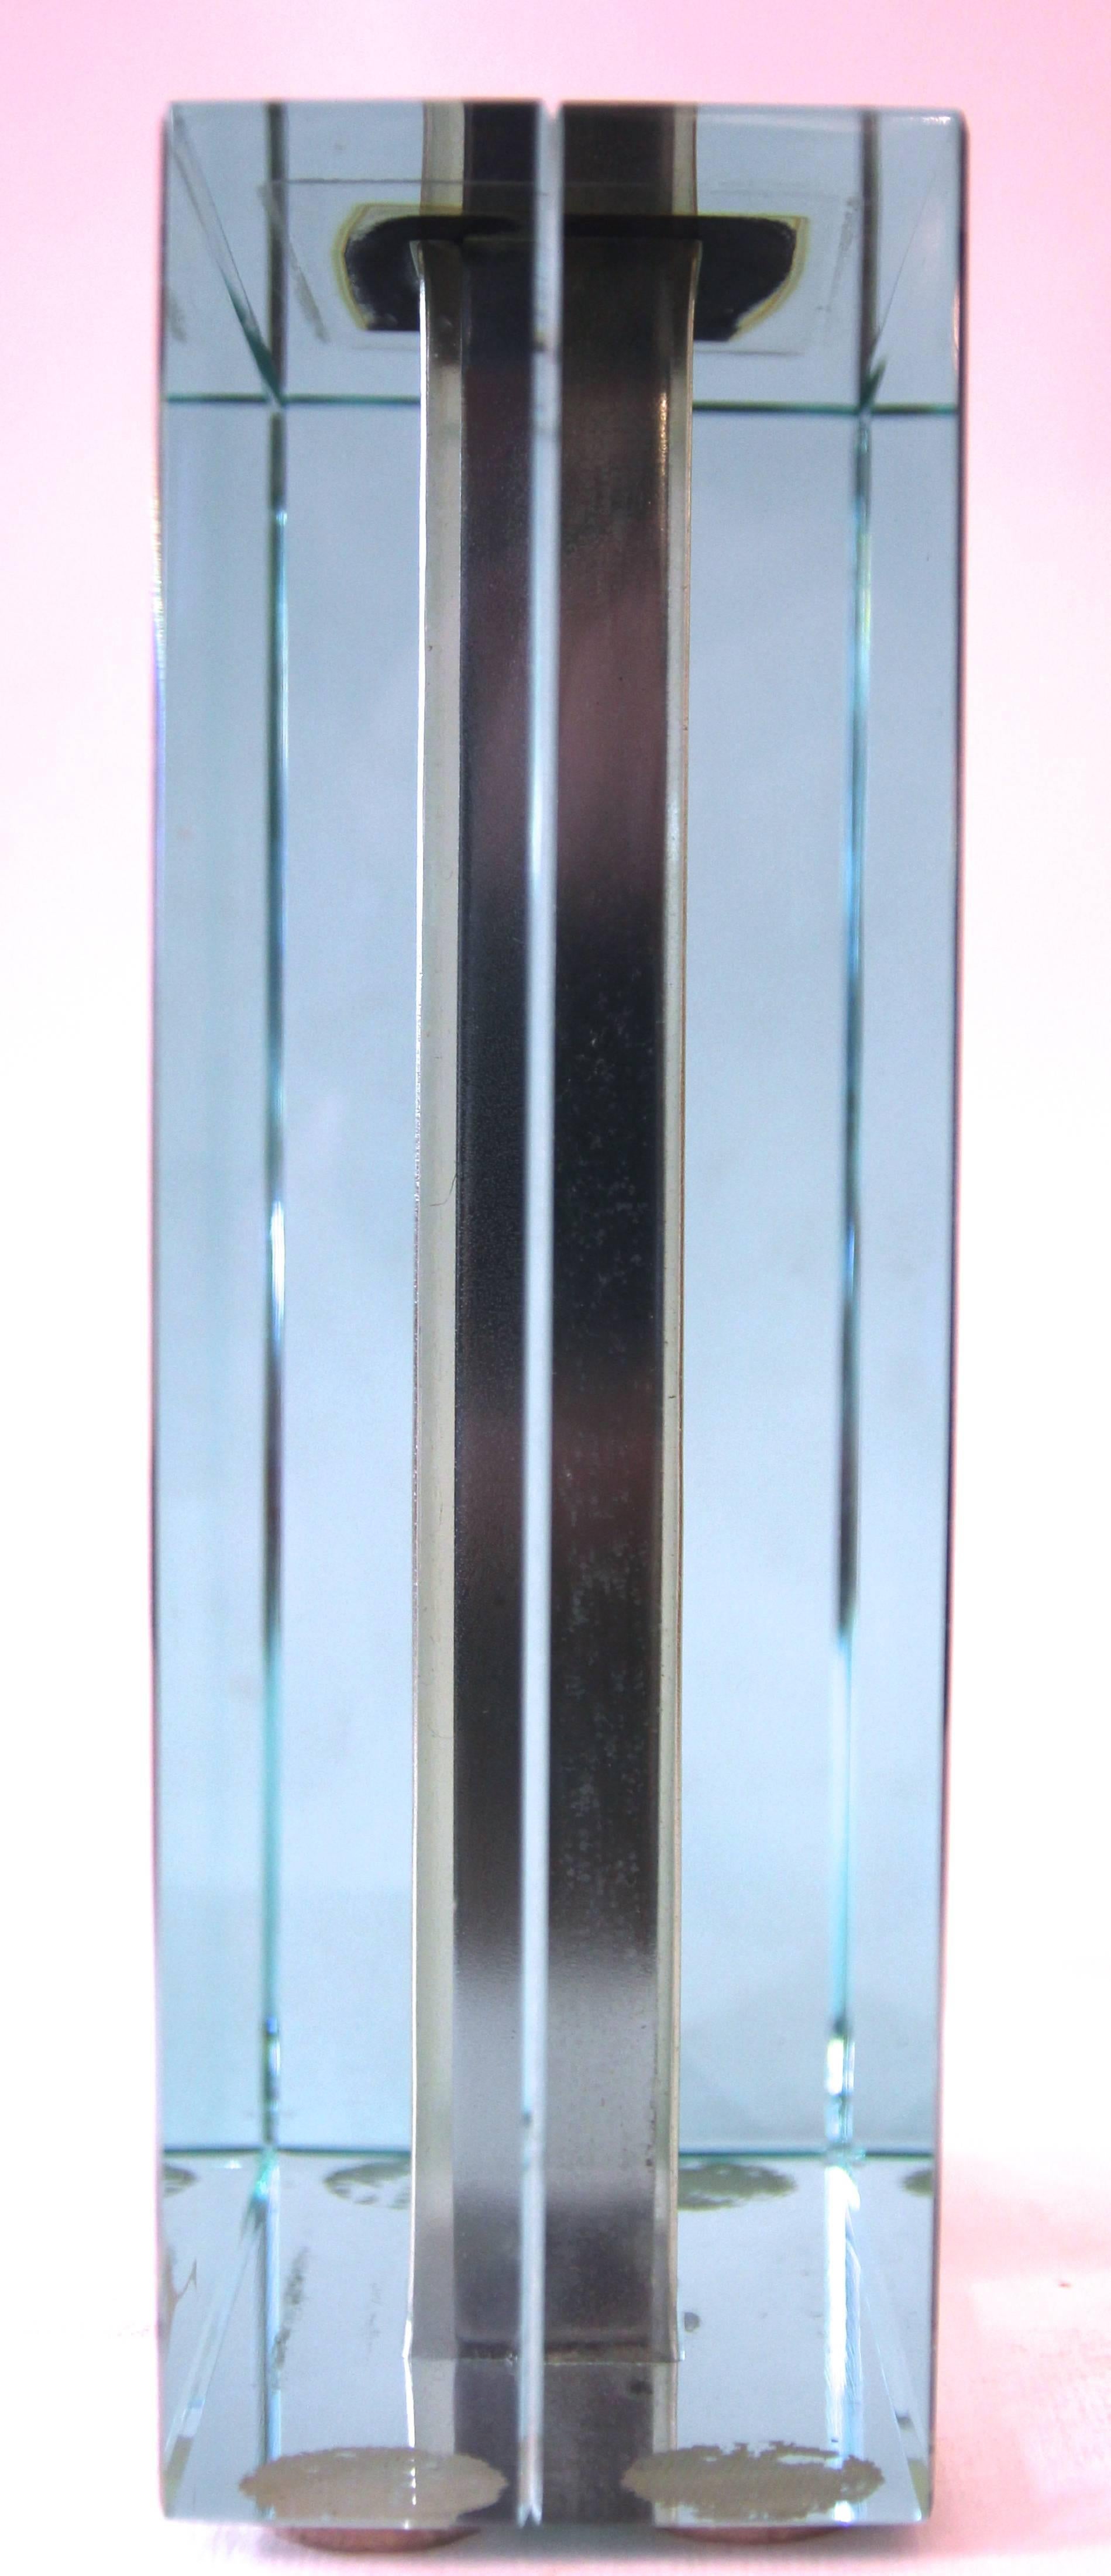 Fontana Arte,
Colorful crystal vase,
Metal chrome
Production Fontana Arte,
Adhesive label production,
Circa 1960, Italy.
Height: 20 cm, width: 14 cm, depth: 6 cm.